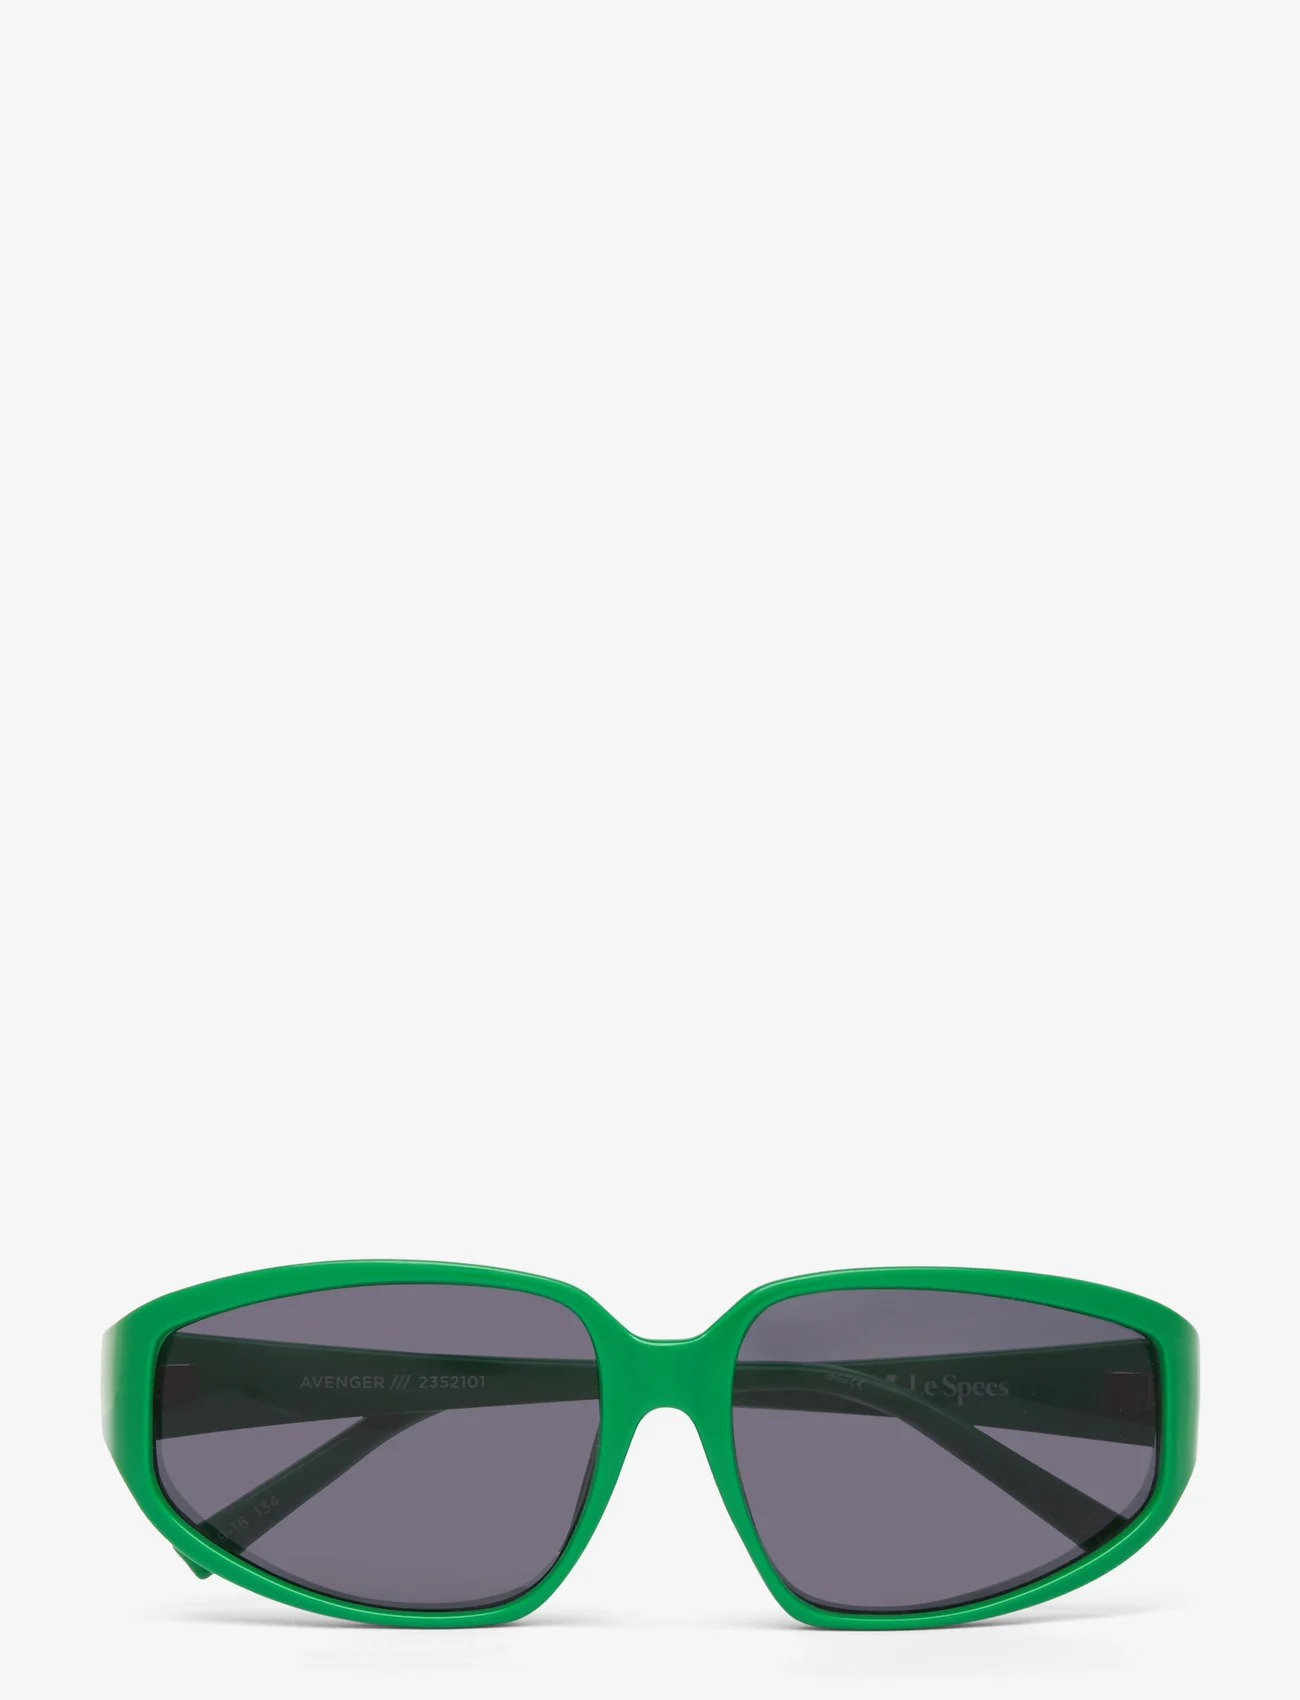 Le Specs - AVENGER - d-form - parakeet green w/ smoke mono lens - 0